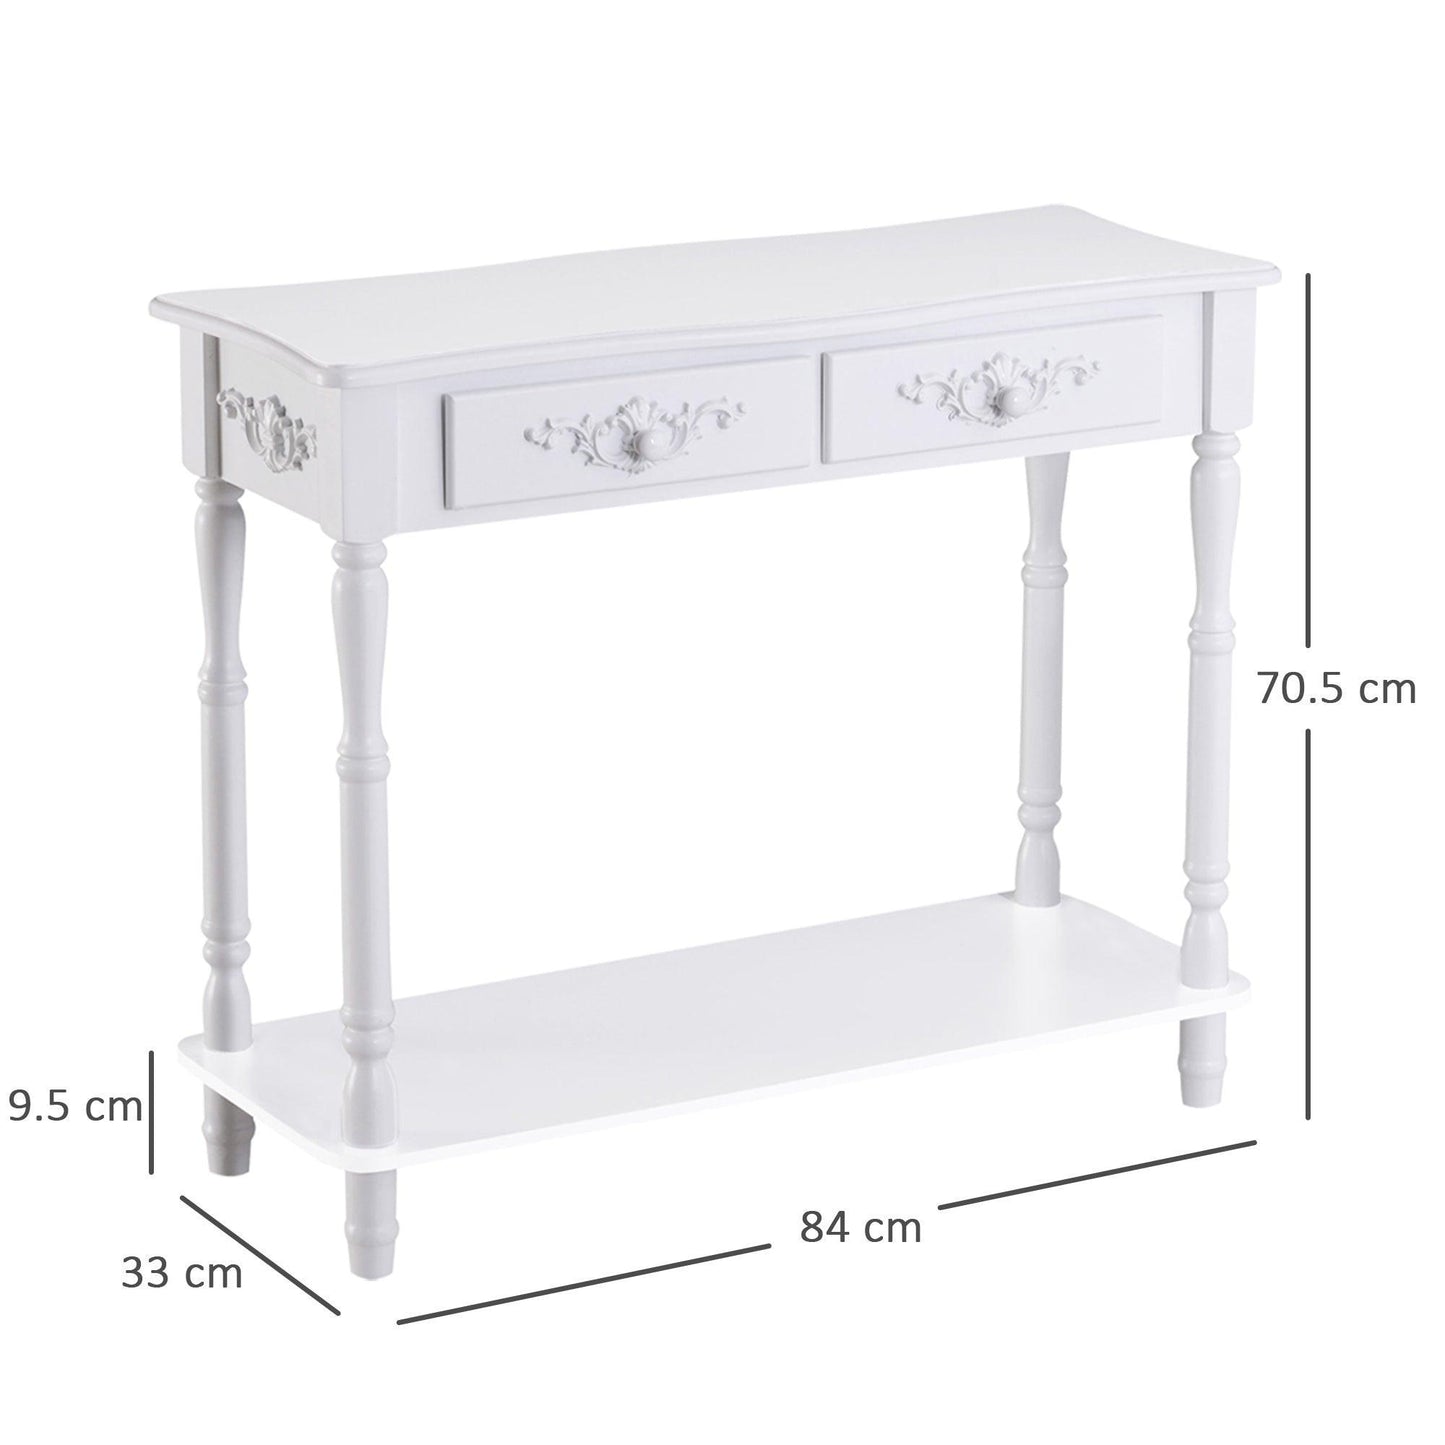 HOMCOM White Console Table with Storage Shelves & Drawers - ALL4U RETAILER LTD